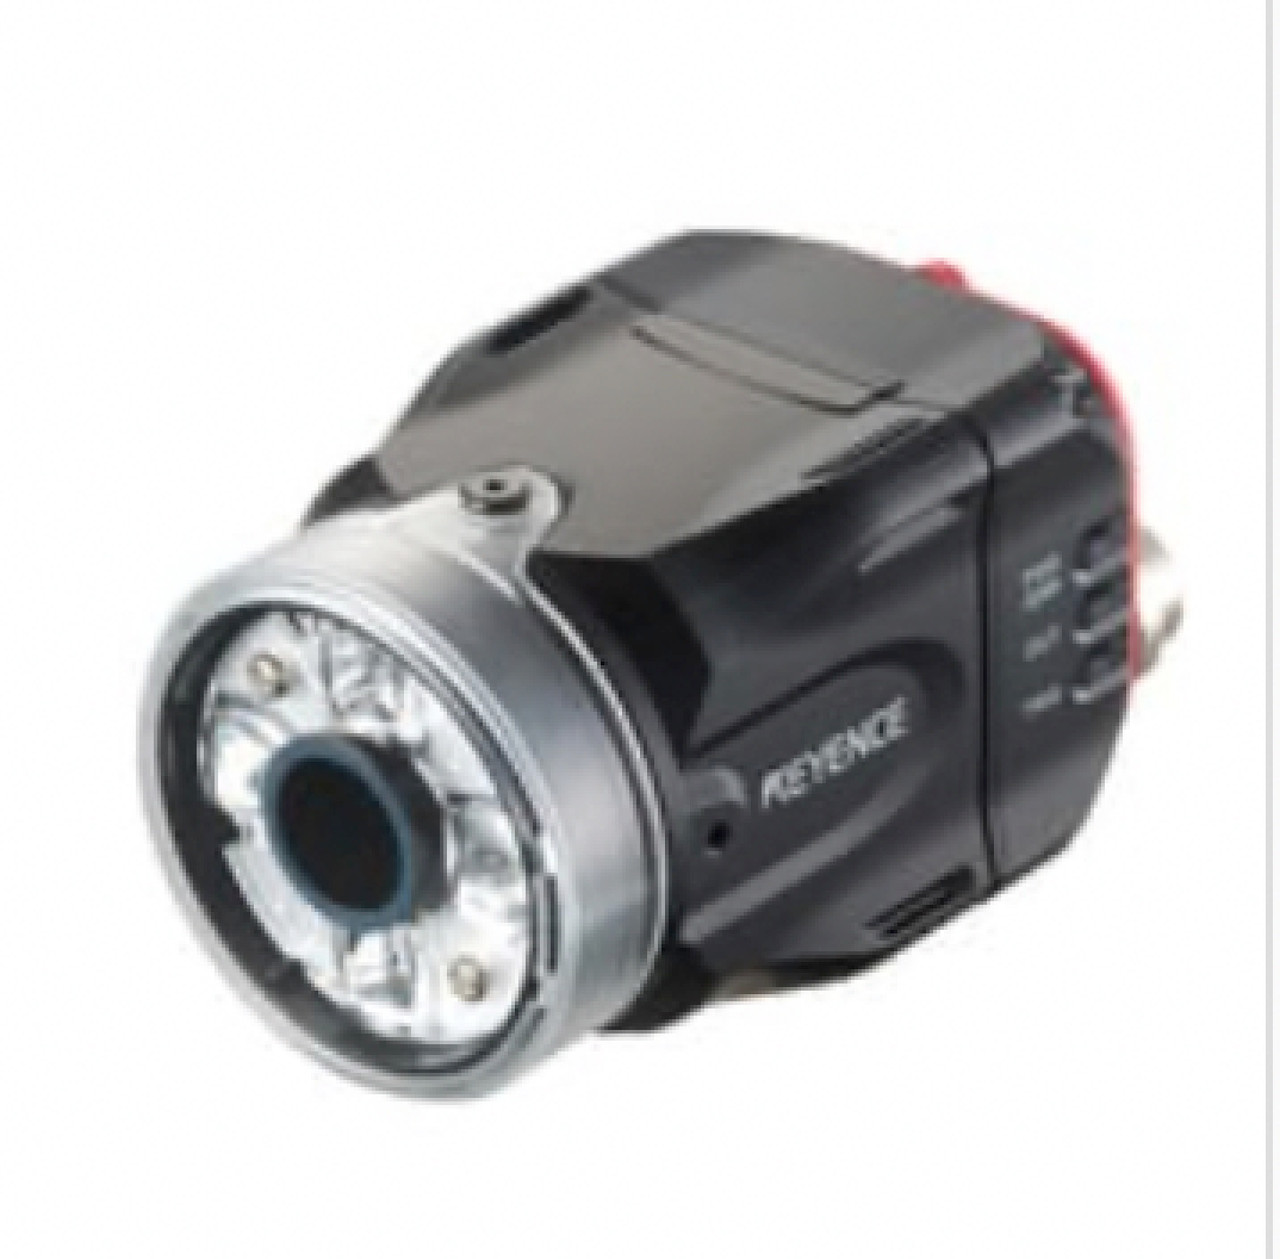 Keyence IV-500CA Vision Sensor, Standard Distance, Color, Automatic Focus Model [Refurbished]